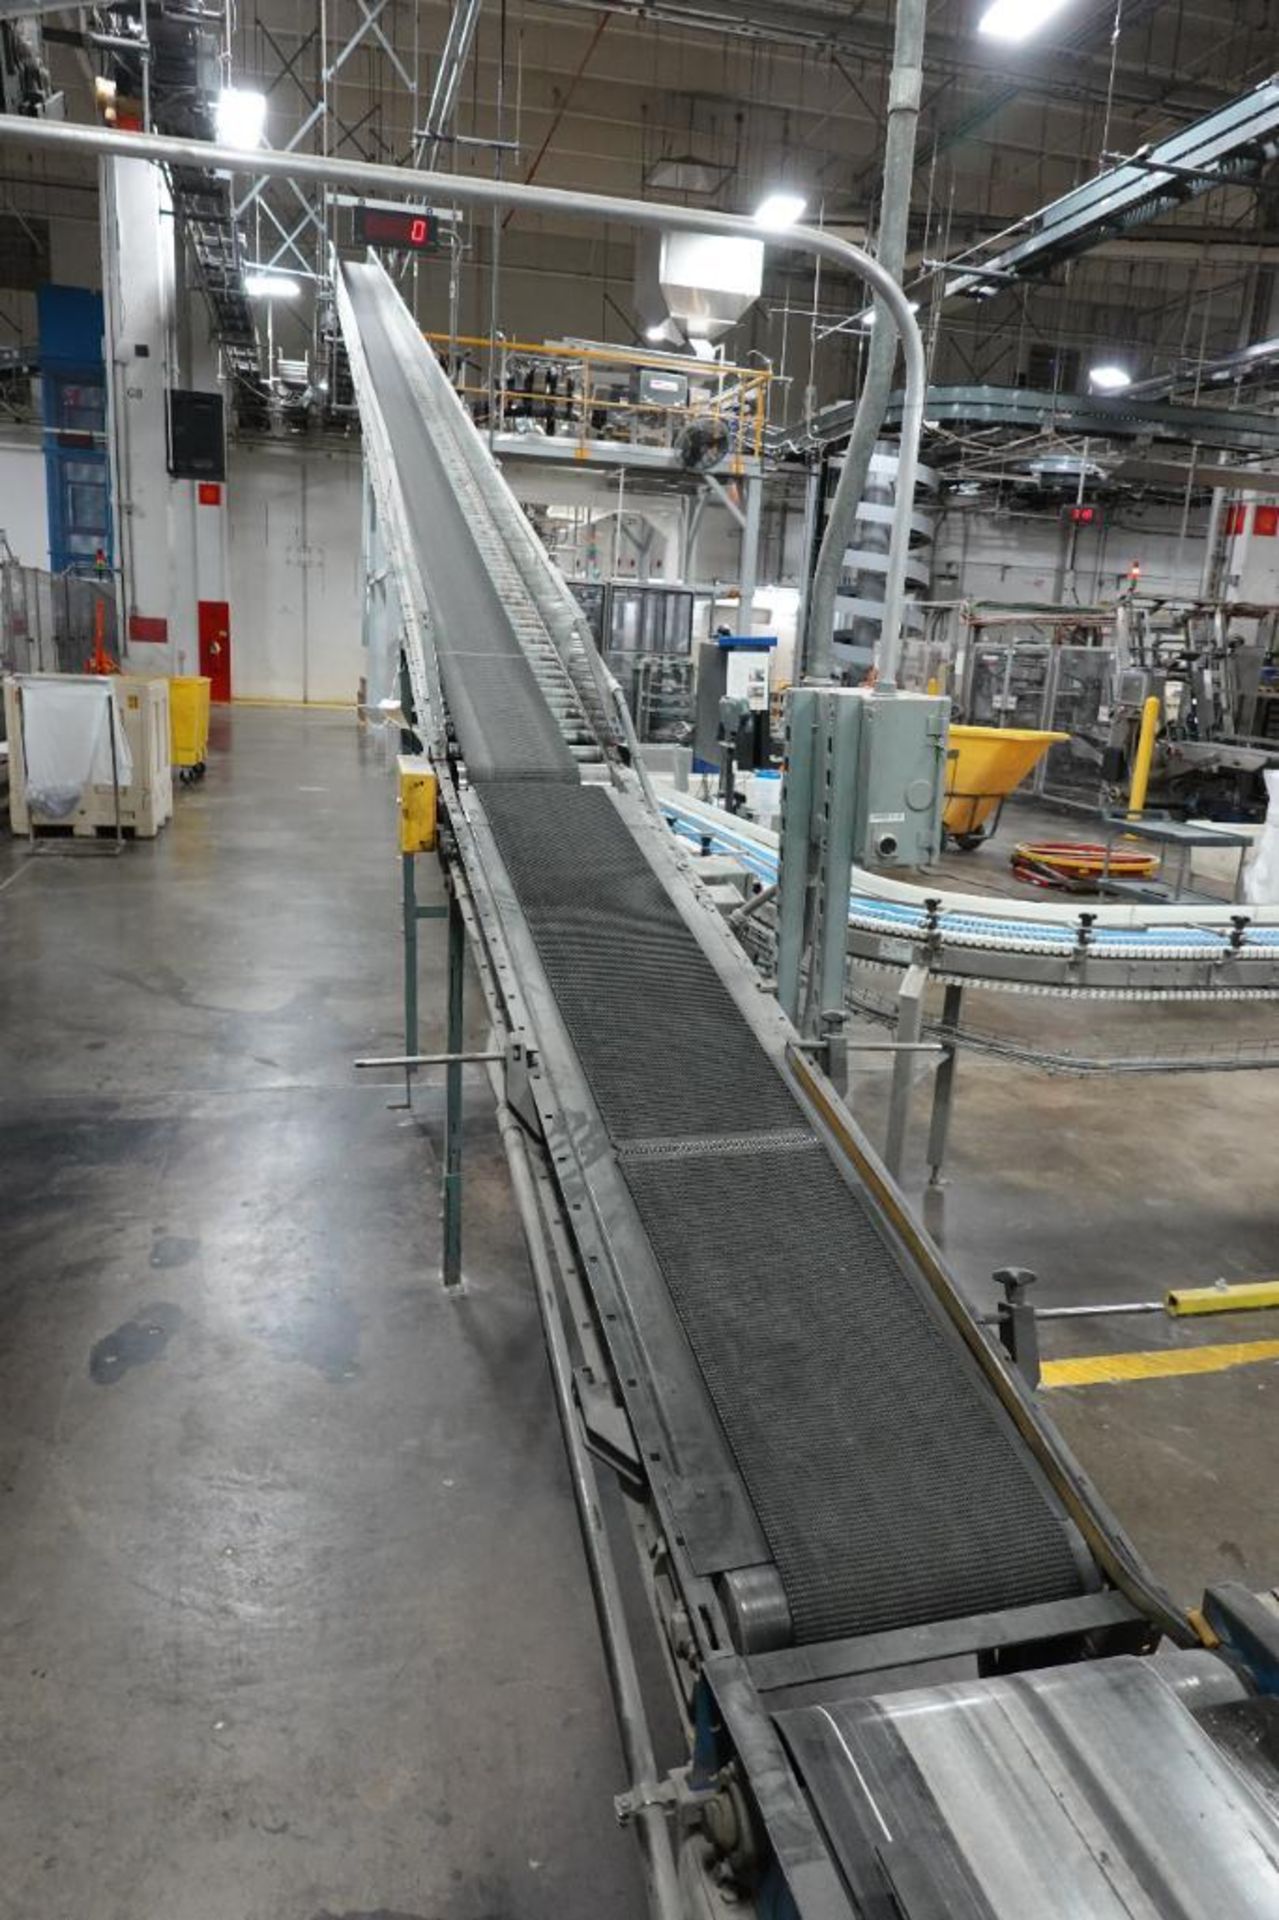 Incline rubber belt conveyor